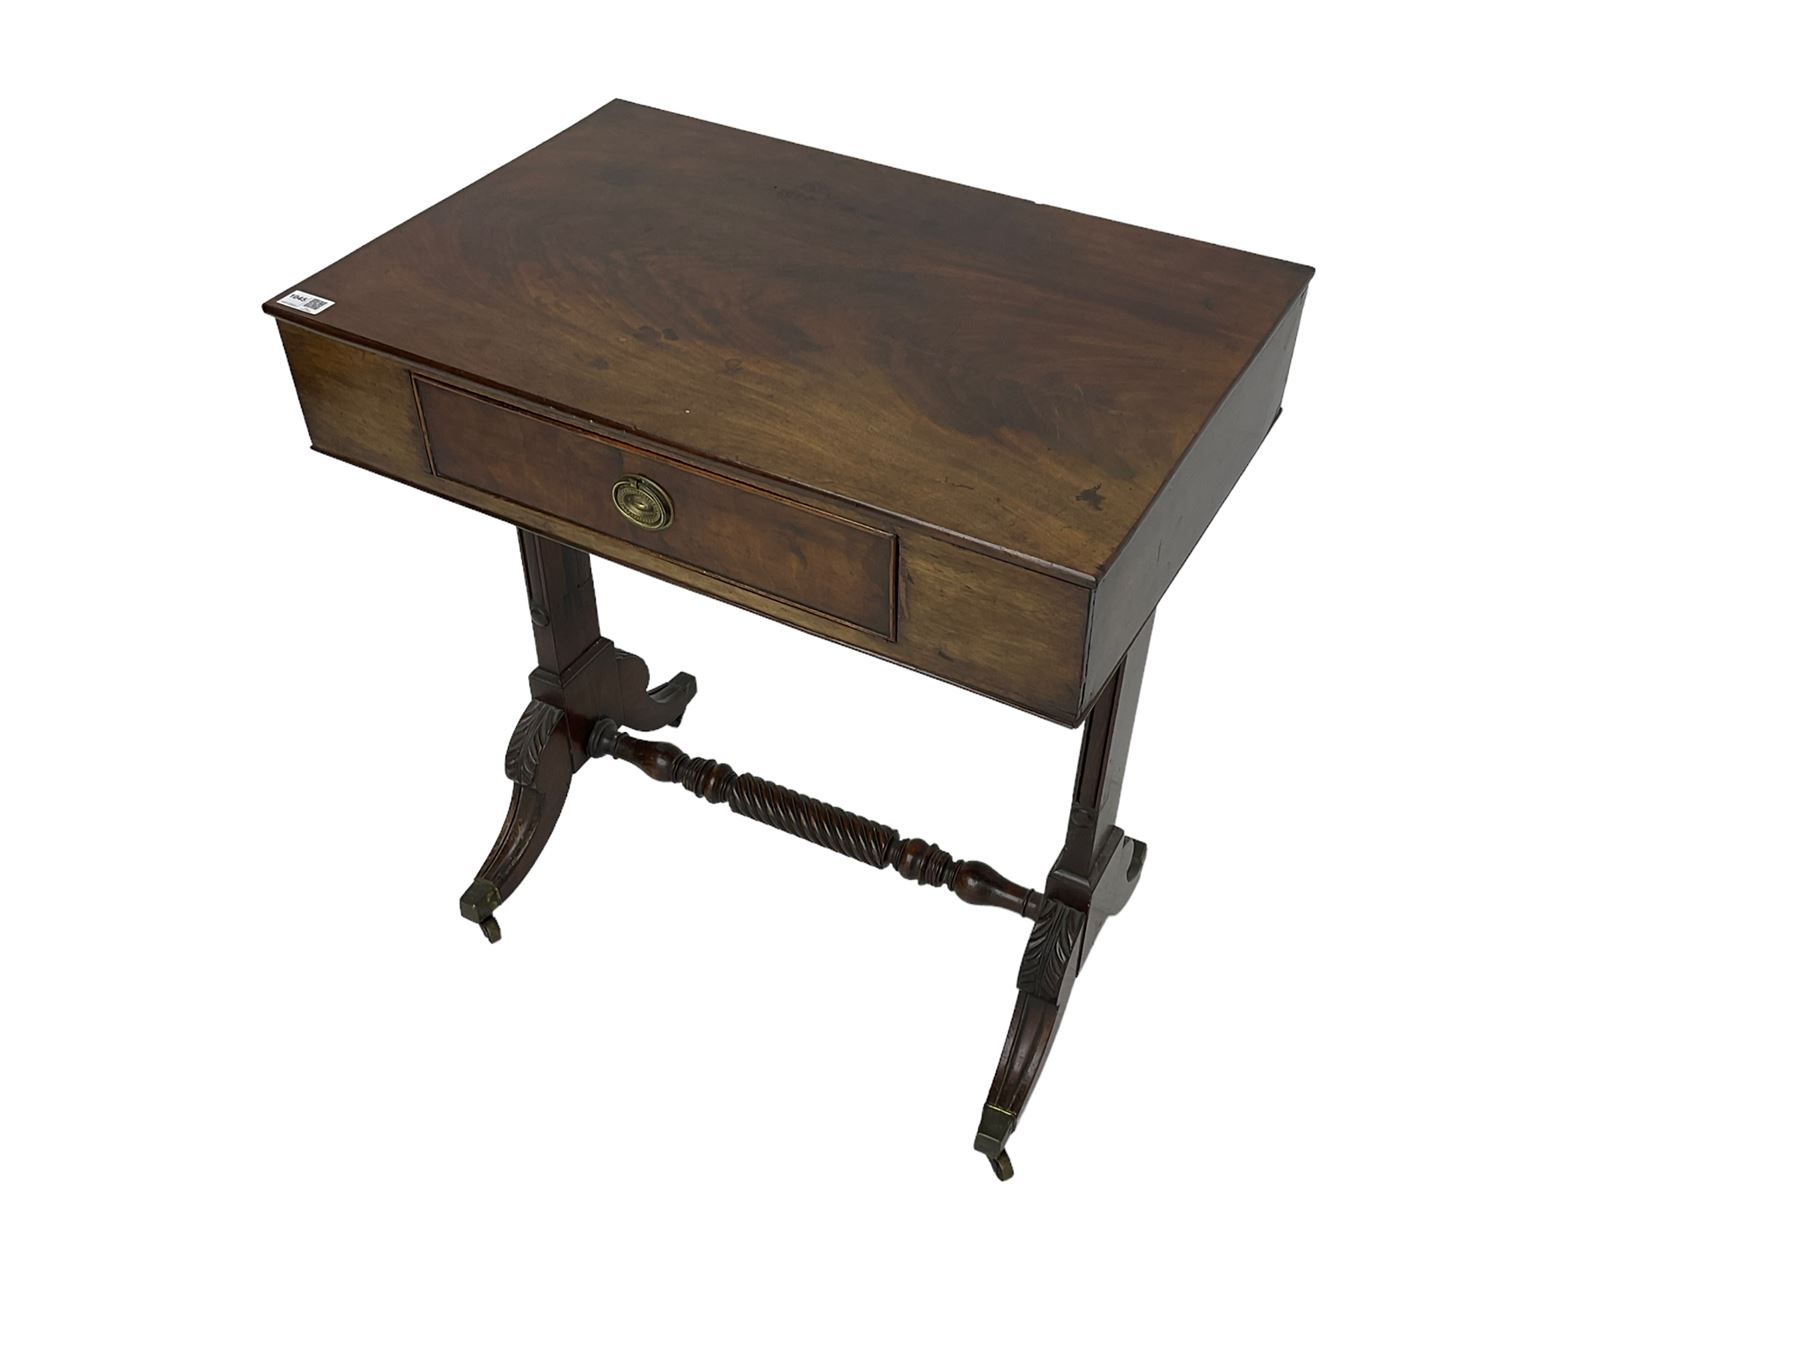 19th century mahogany side table - Image 5 of 6